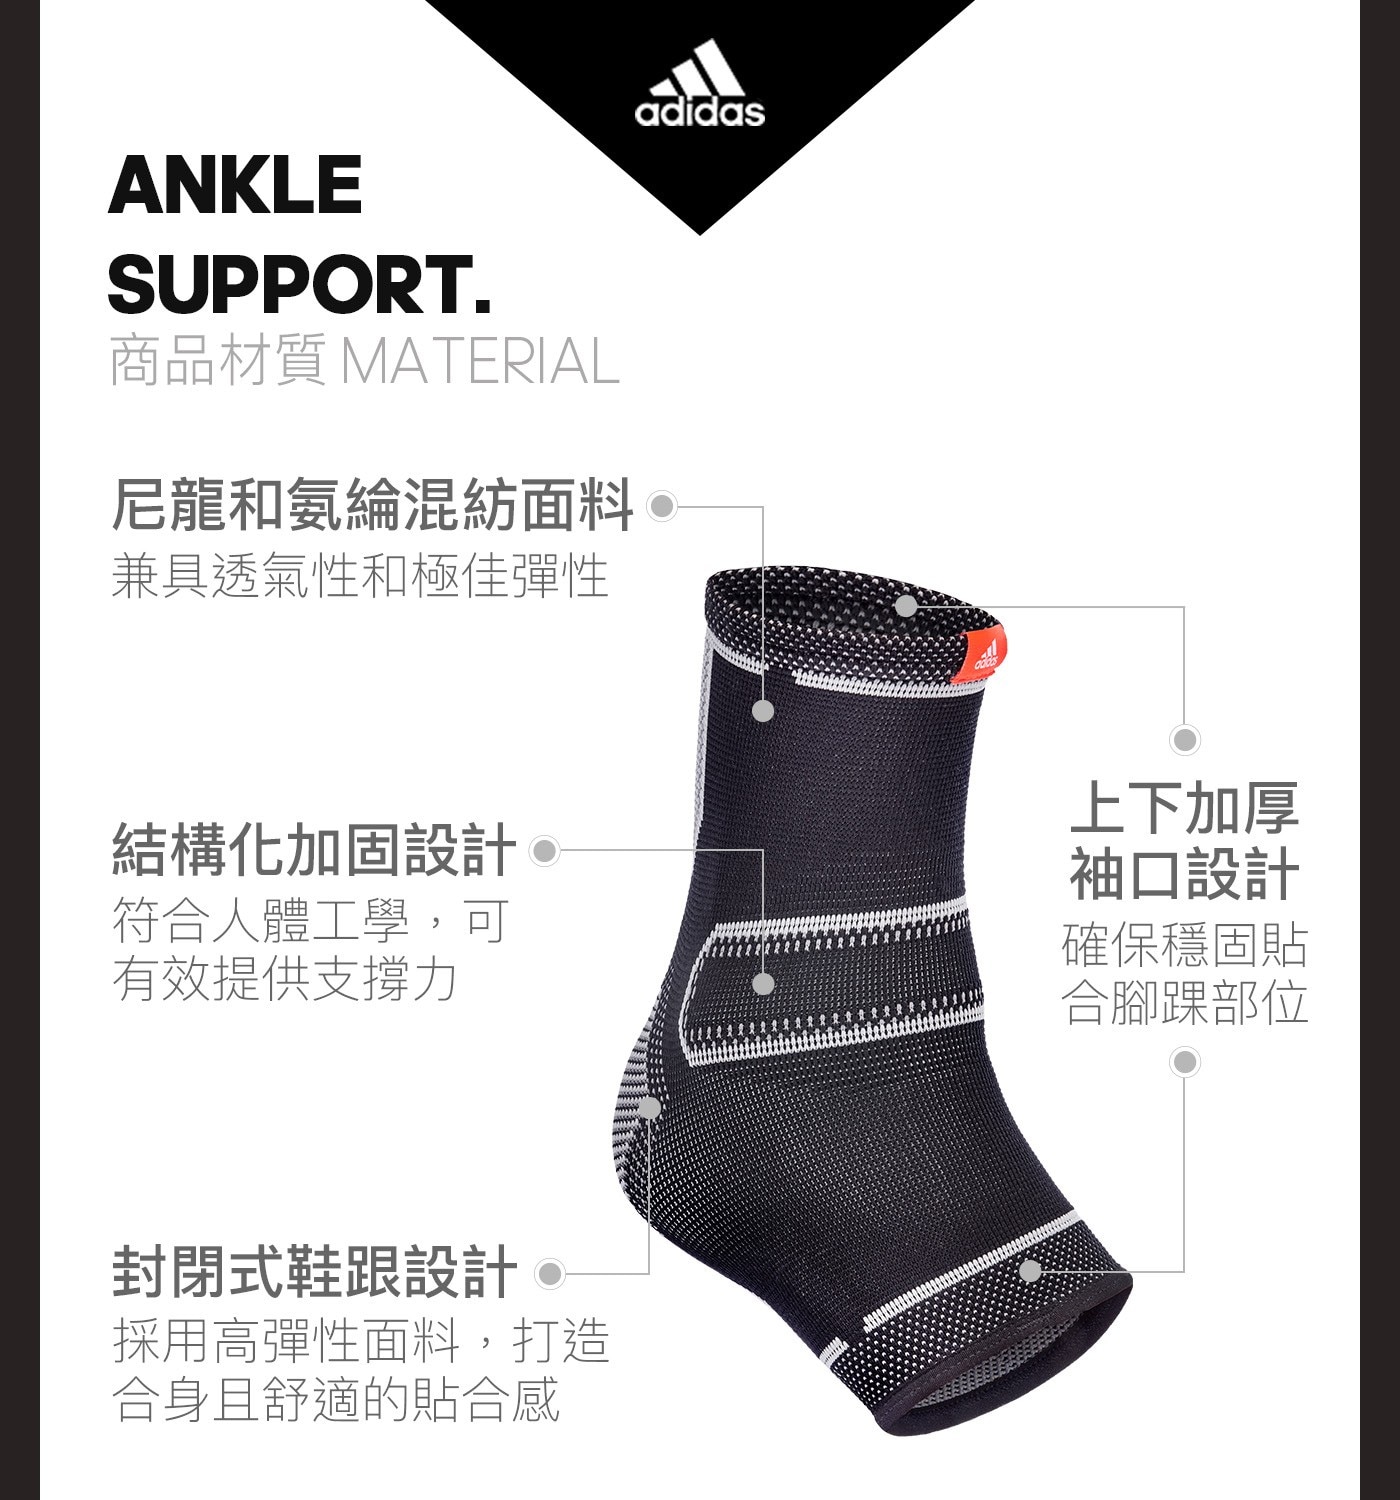 Adidas 踝關節用高性能護套 2入穩定減震頂部和底部均配有厚袖口設計可在訓練過程中保持穩定與支撐力有效緩解衝擊減低震動保護踝關節